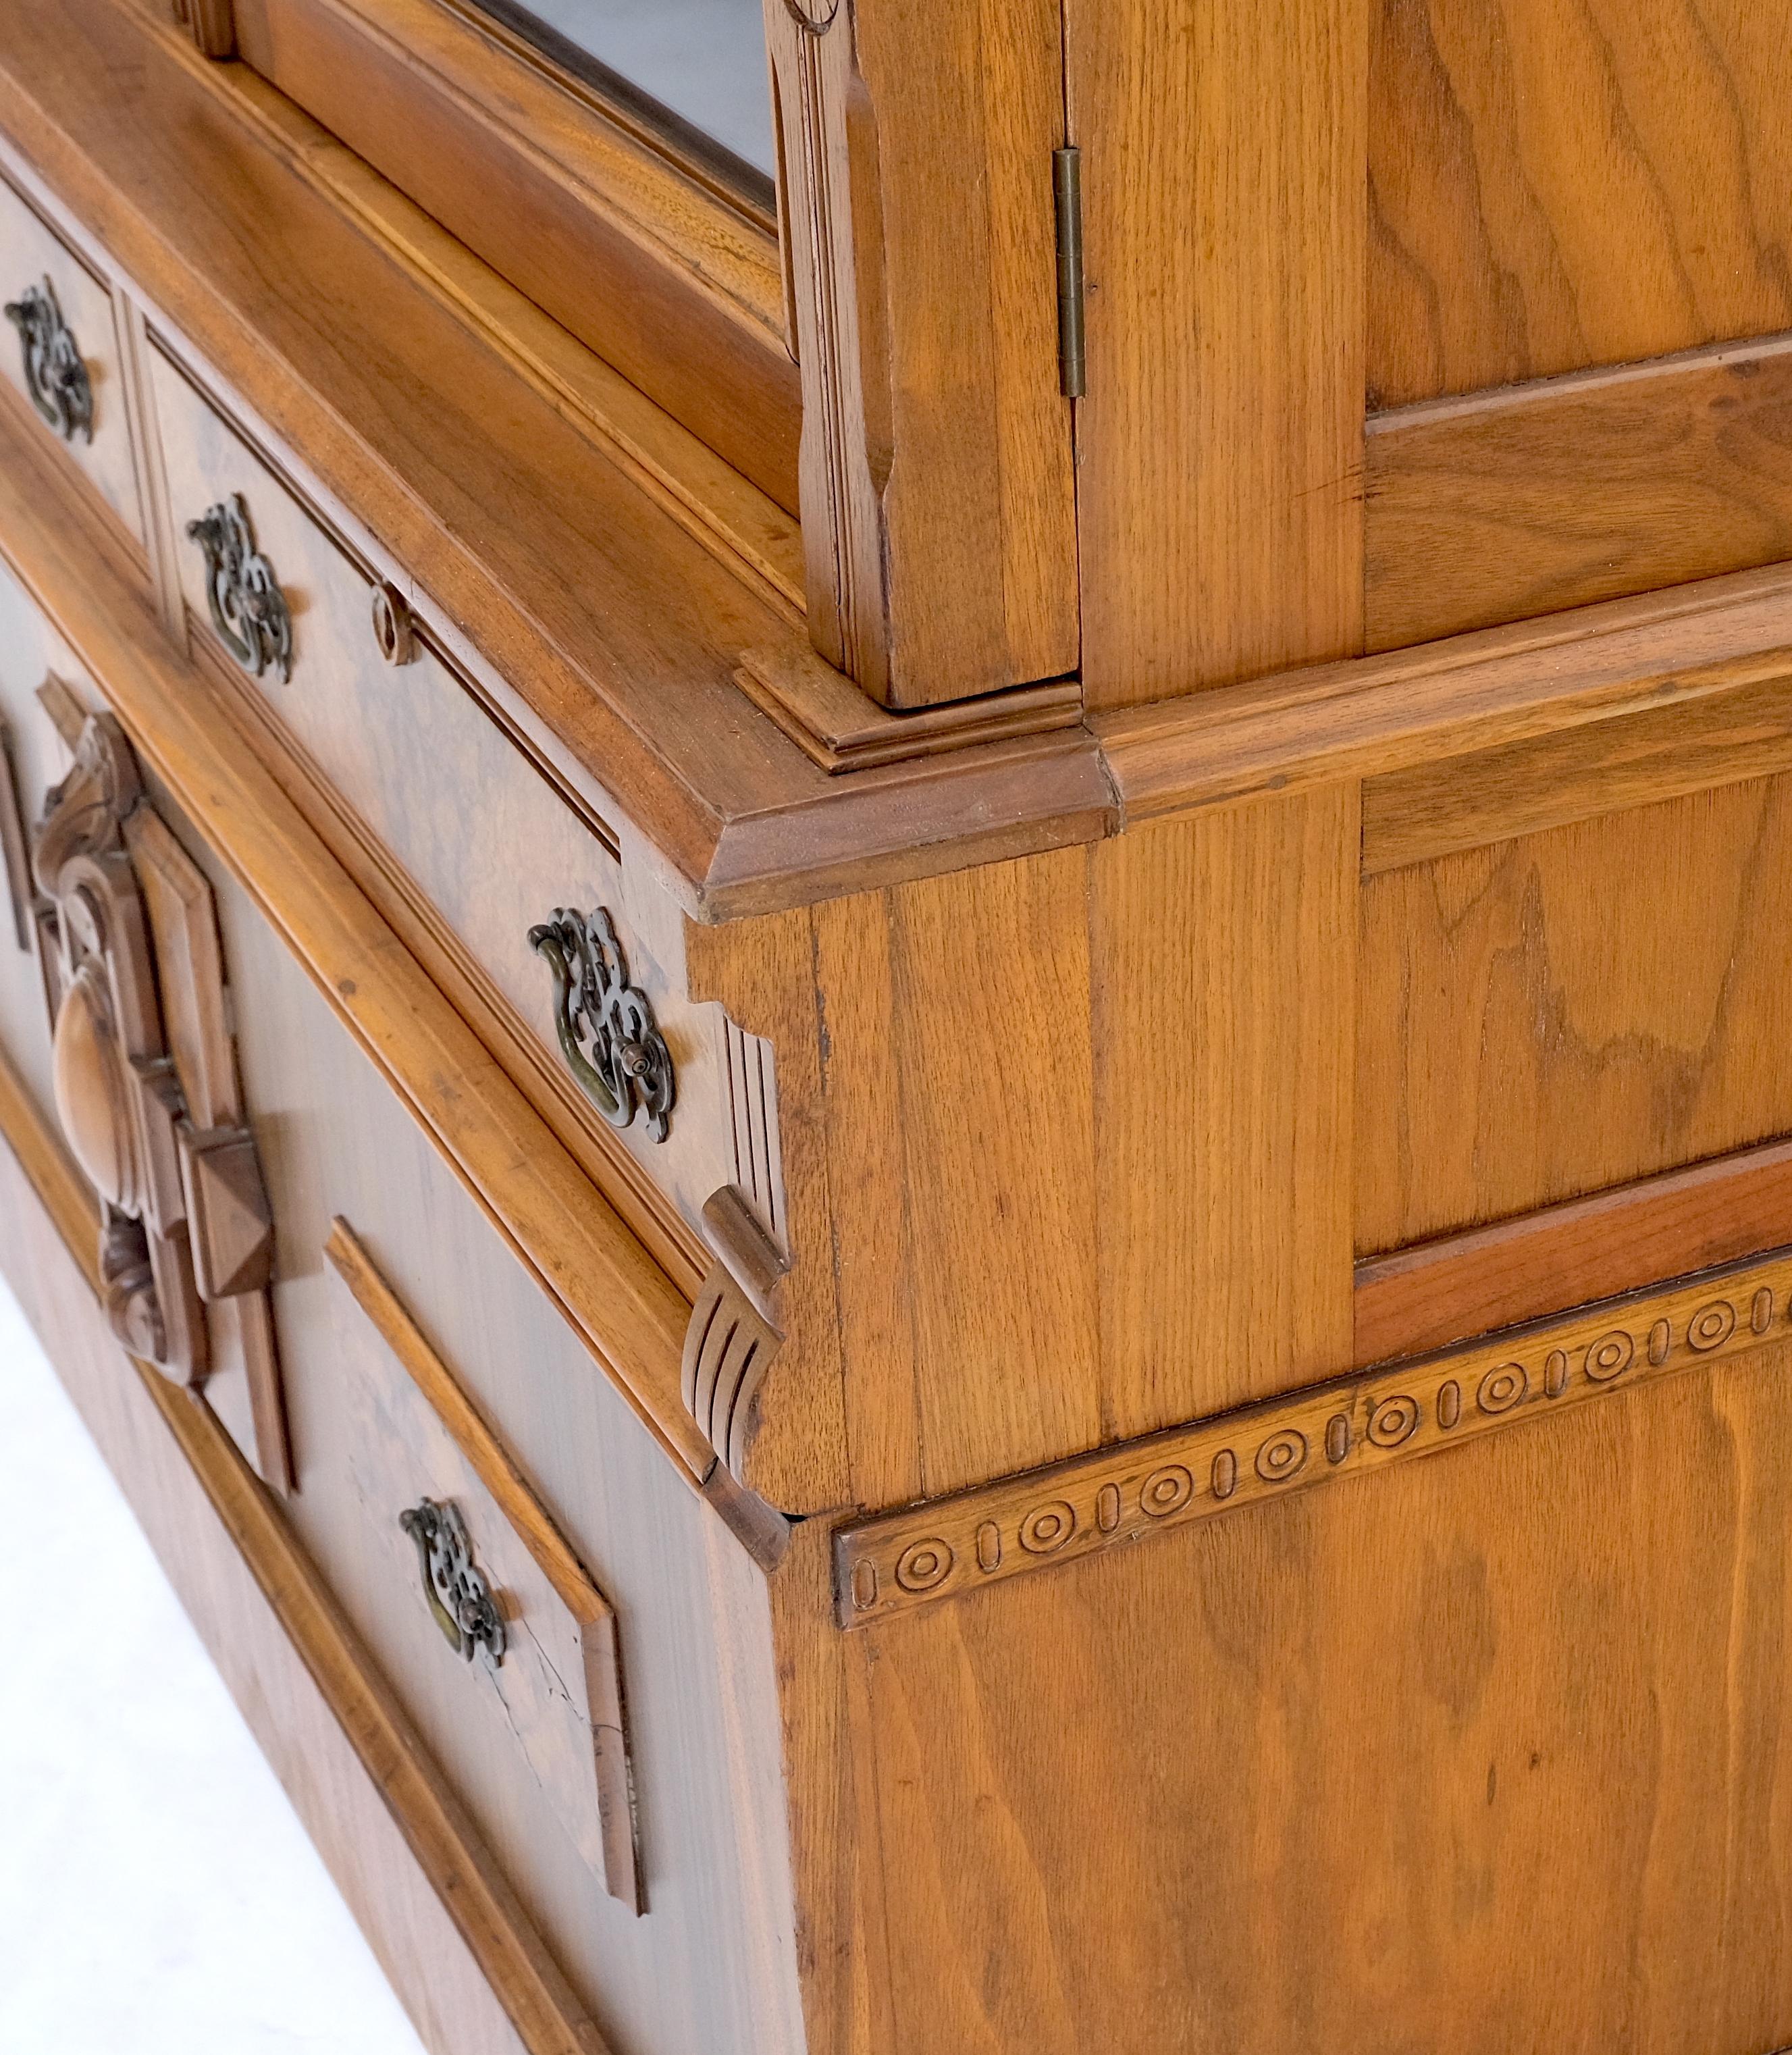 Brass Burl Walnut Adjustable Shelves Two Doors One Drawer Antique Bookcase Cabinet For Sale